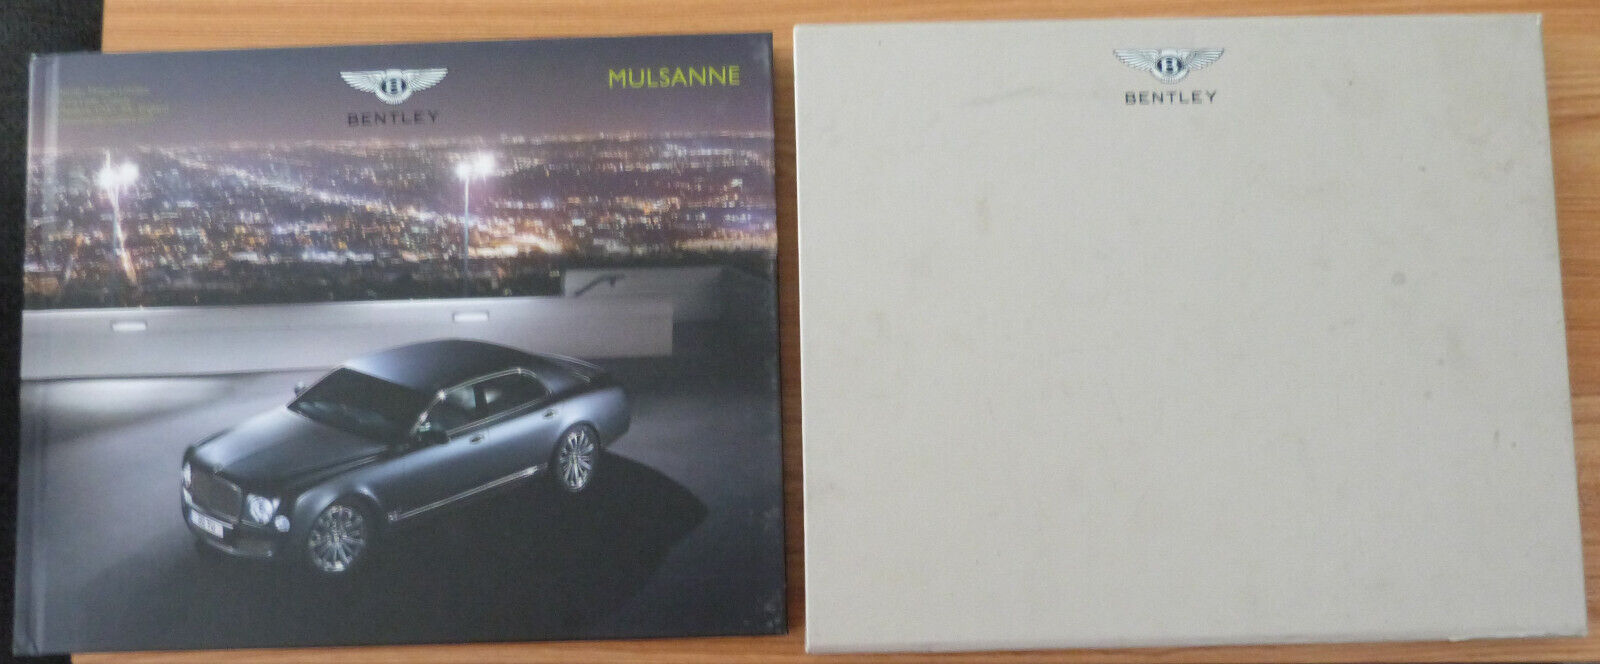 2013  Bentley Mulsanne Sales Book  HC  Slipcase  Color Photos  2013